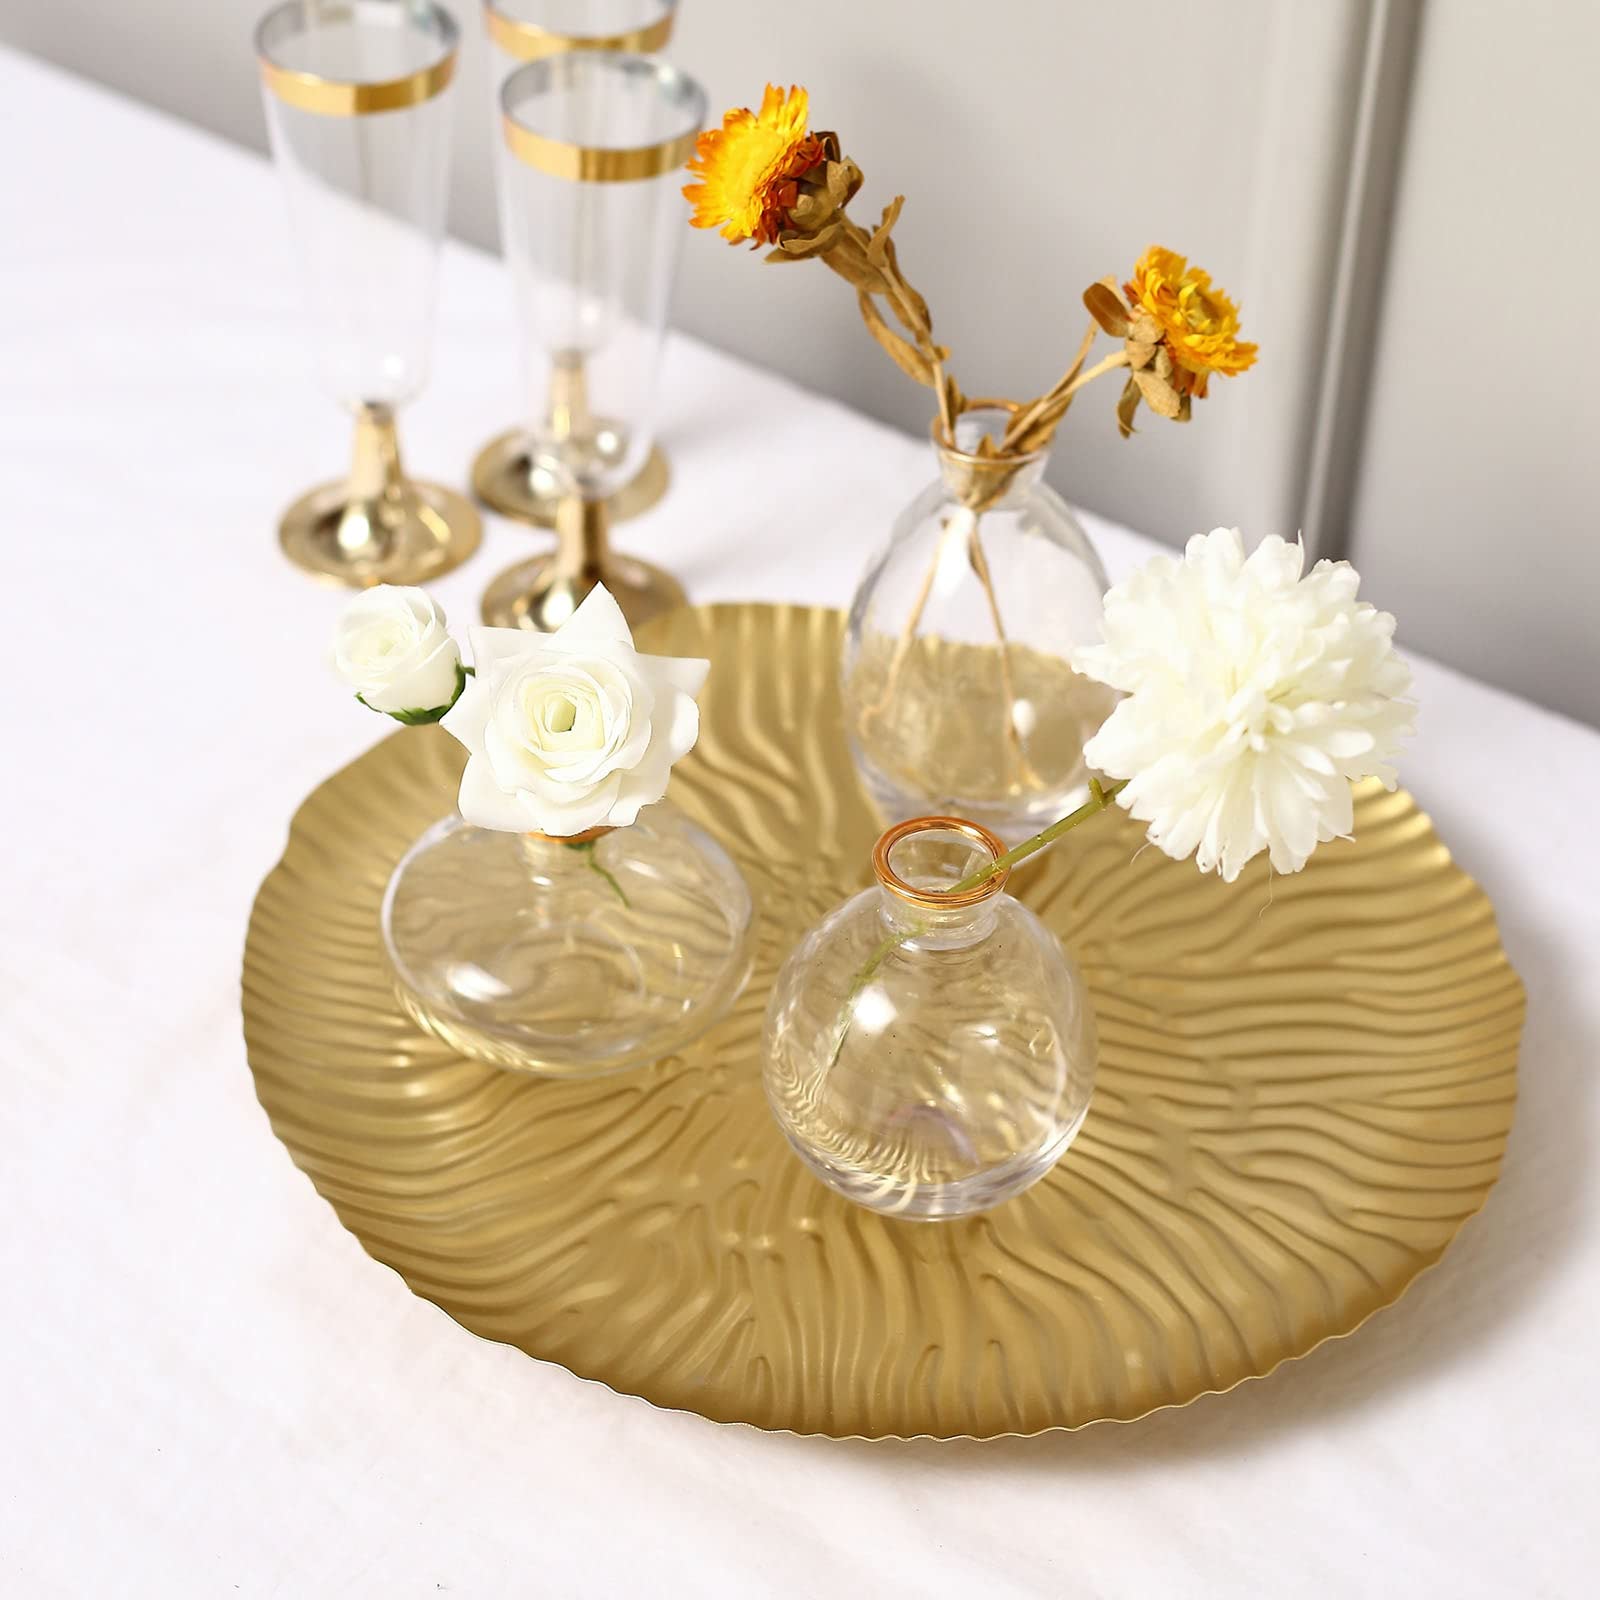 TABLECLOTHSFACTORY 12" Gold Wavy Hairpin Leg Metal Serving Tray Dessert Display, Pedestal Wedding Cake Cupcake Stand Centerpiece